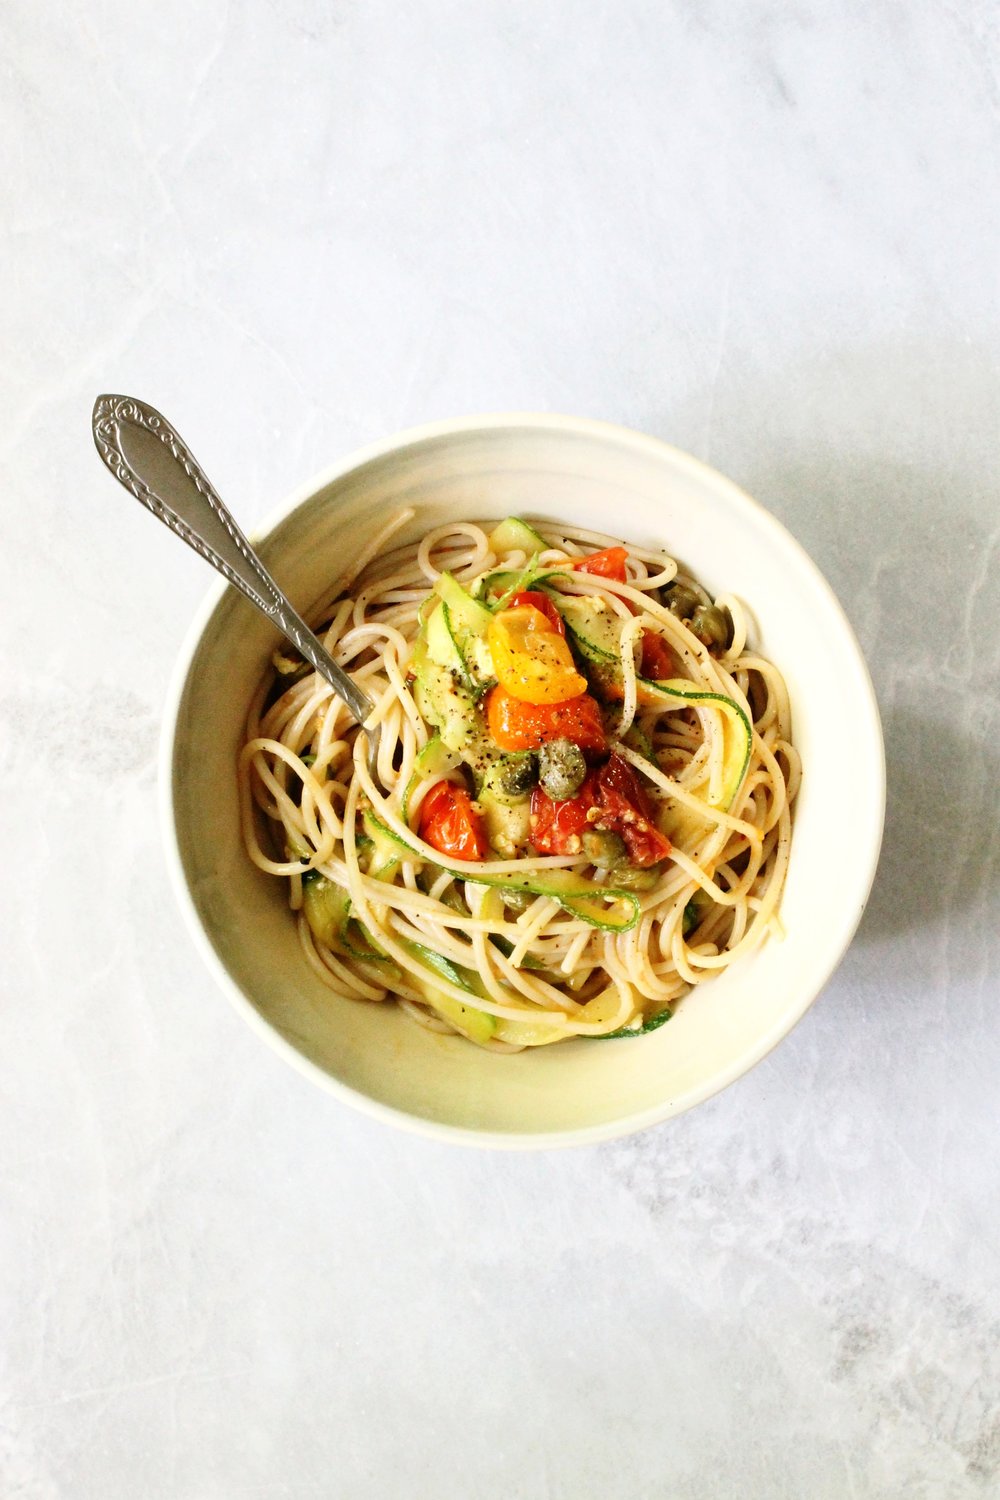 Garlicky spaghetti with cherry tomatoes and zucchini